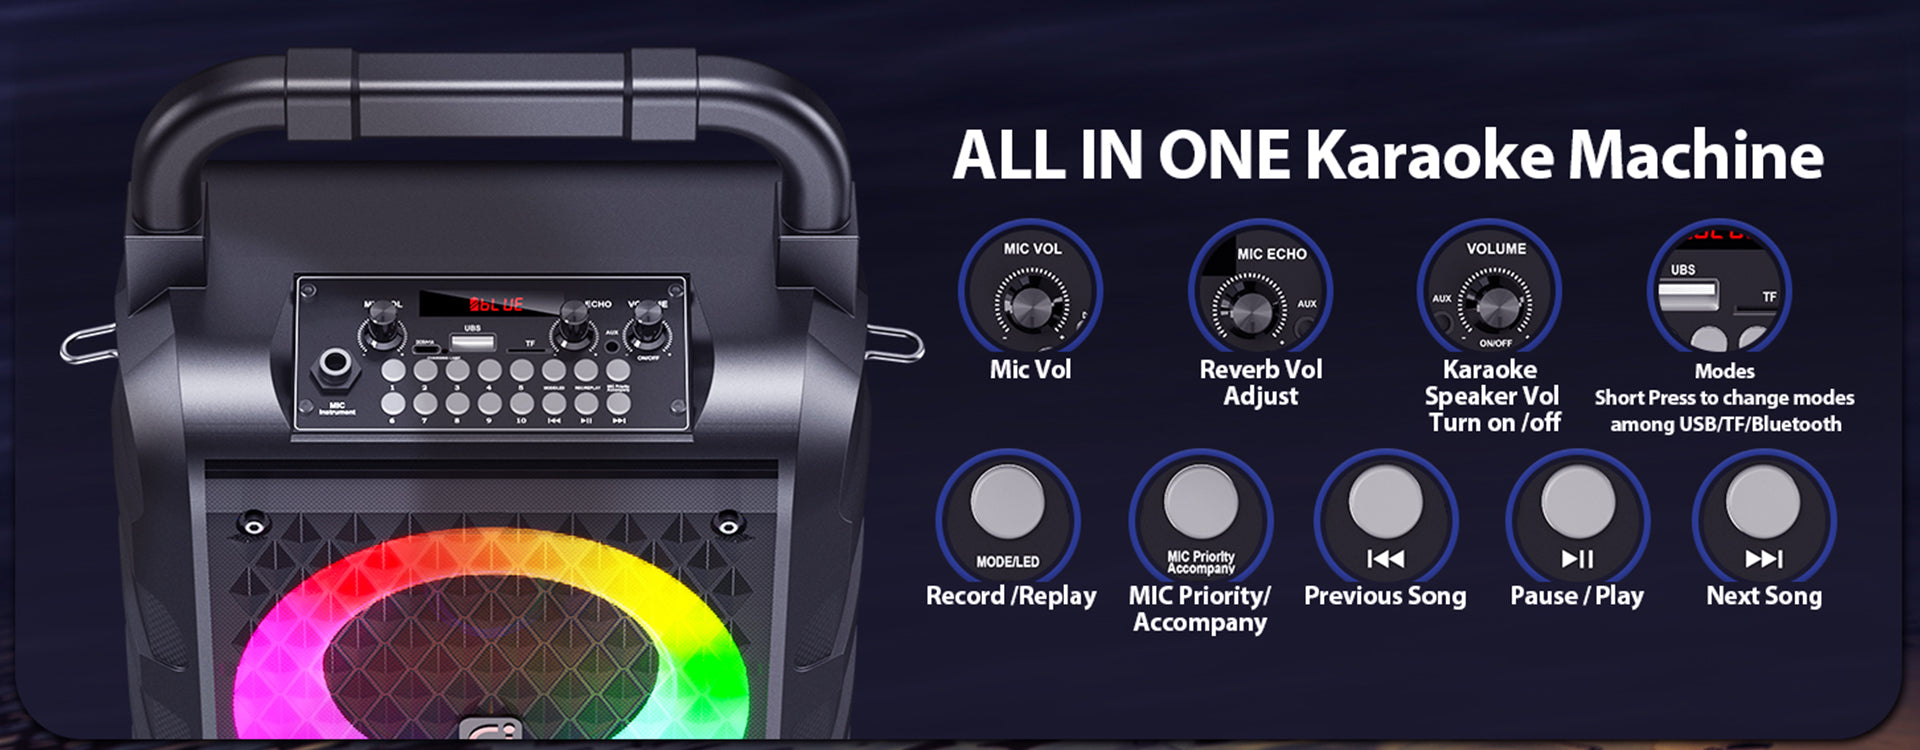 JYX T18T Home Karaoke Machine with 2 wireless microphones. All-in-one karaoke machine function panel.